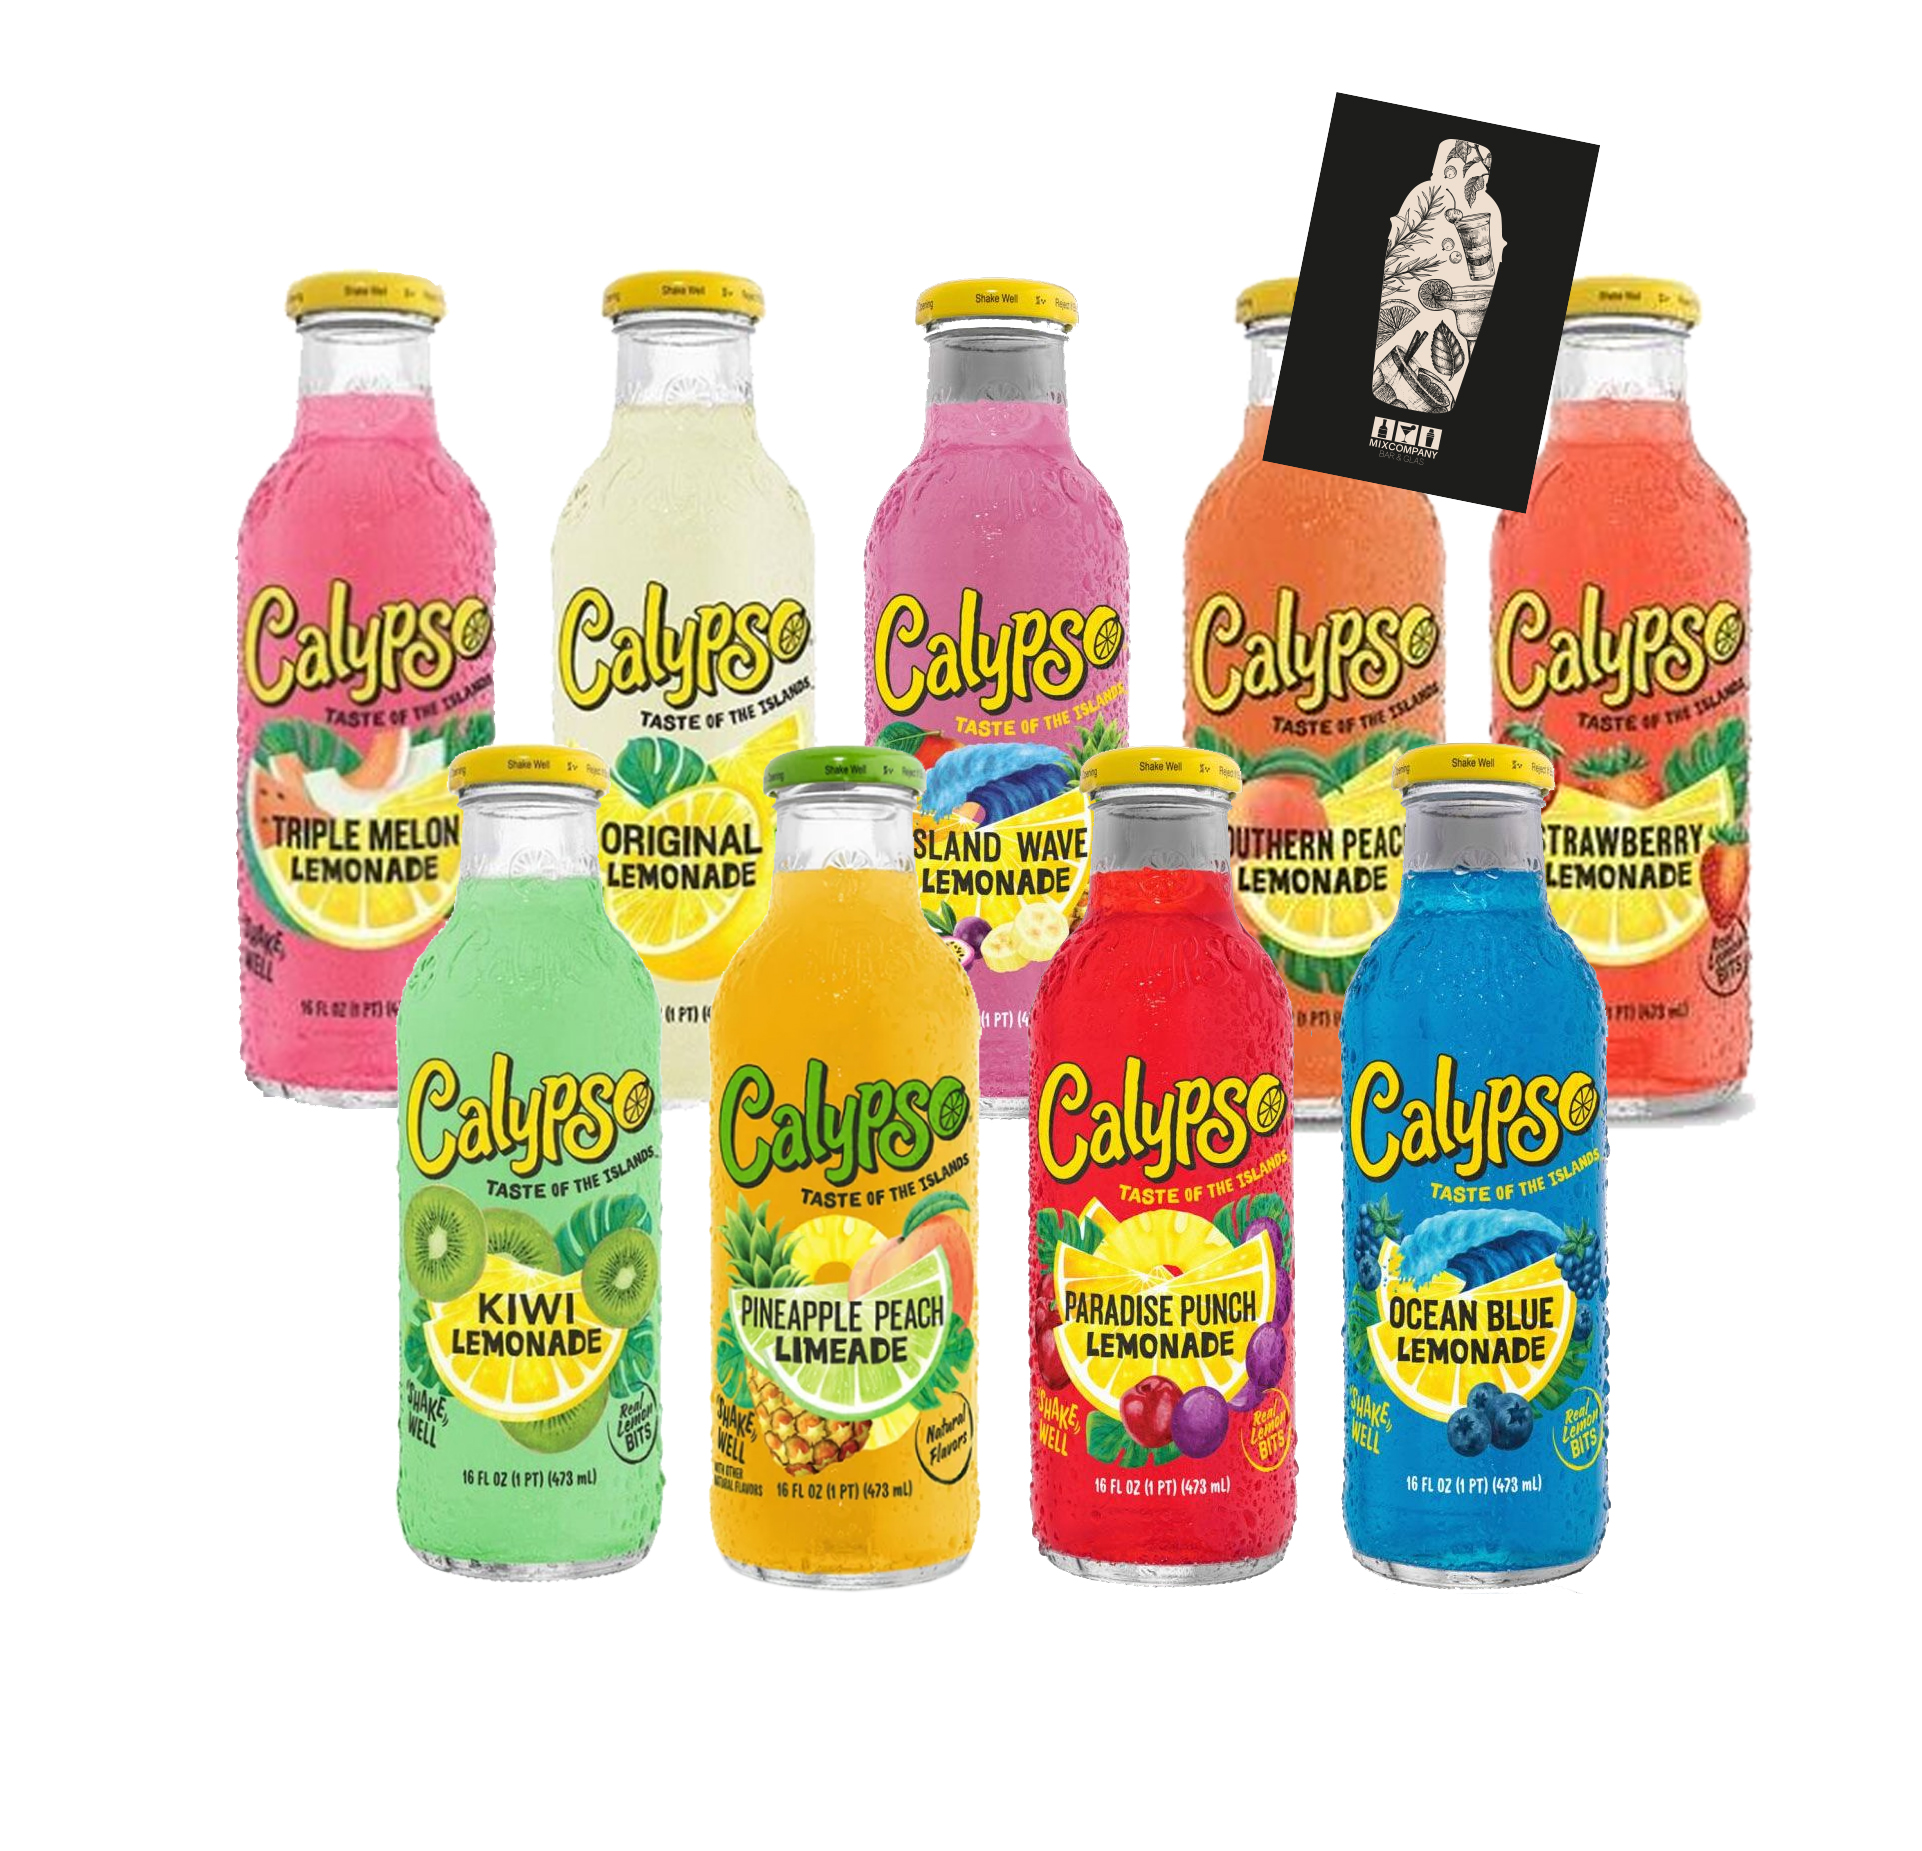 Calypso Lemonade Limeade 9er tasting - 1x pro Sorte je 473ml inkl. Pfand EINWEG Original+Ocean Blue+Southern Peach+Strawberry+Kiwi+Paradise Punch+Triple Melon+Island Wave+Pineapple Peach